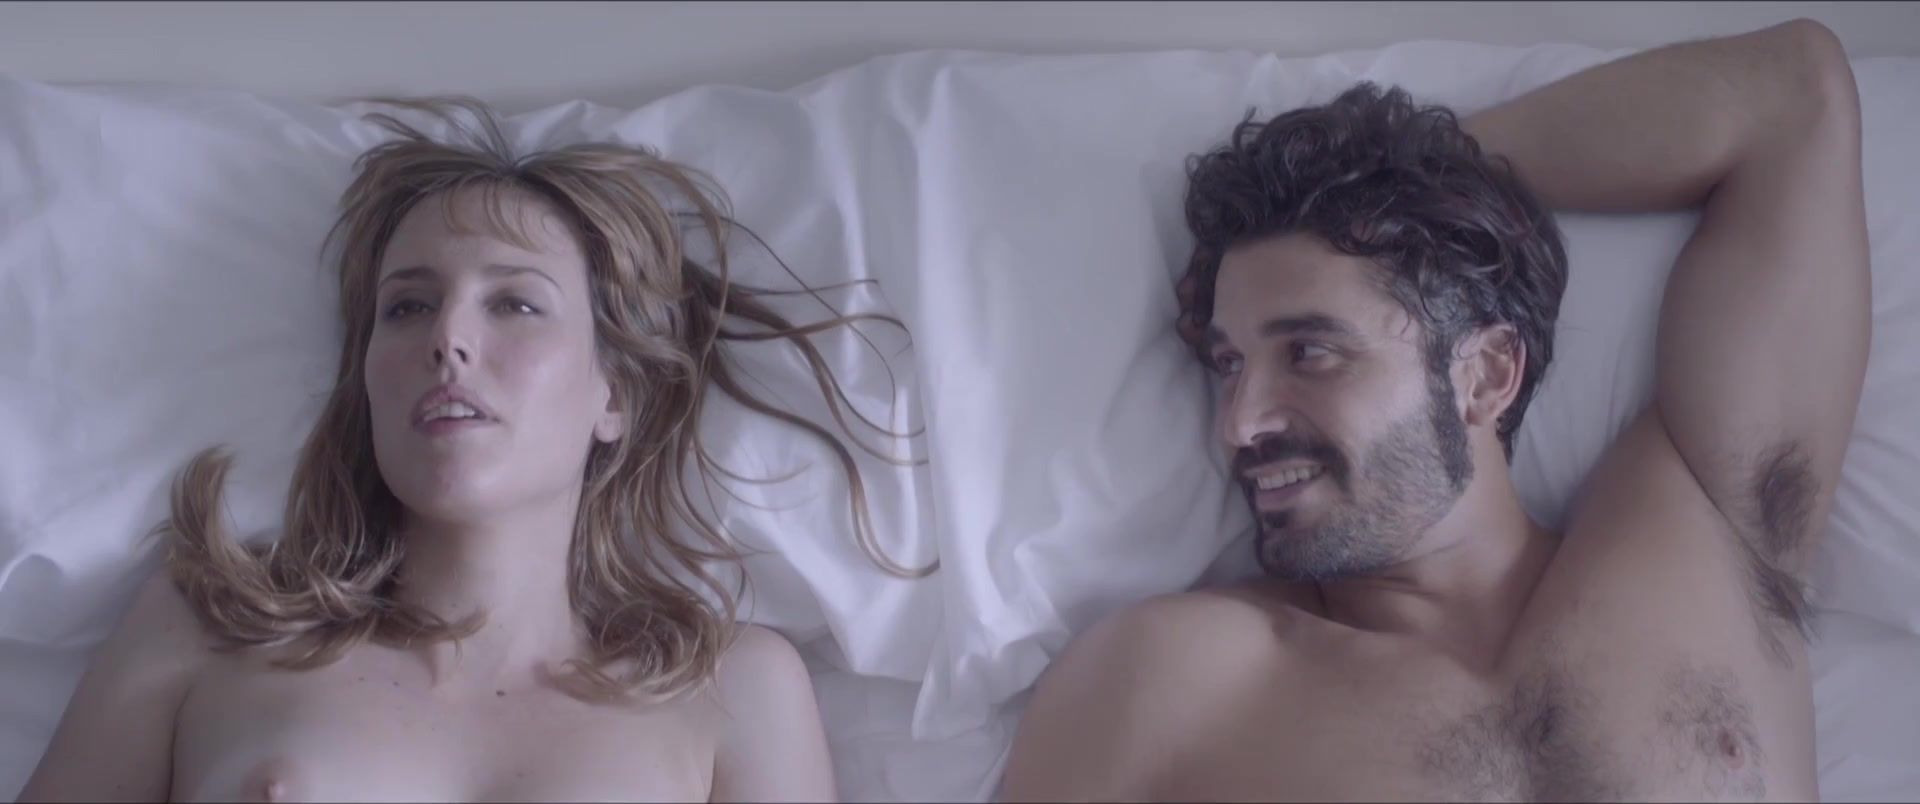 Creamy Natalia de Molina - Kiki, el amor se hace (2016) Bubblebutt